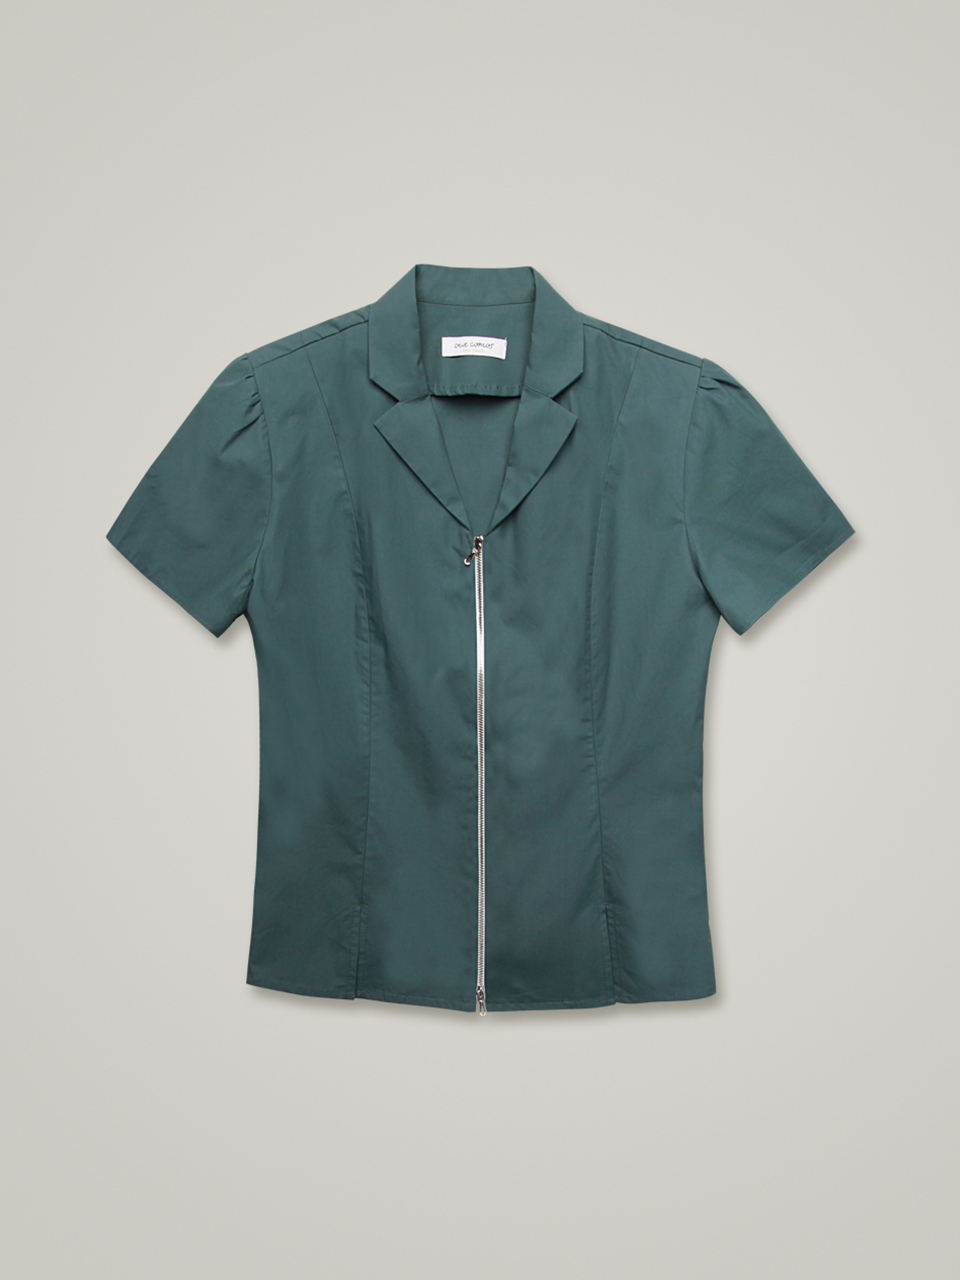 comos 848 two-way zipper shirt (blue-green)